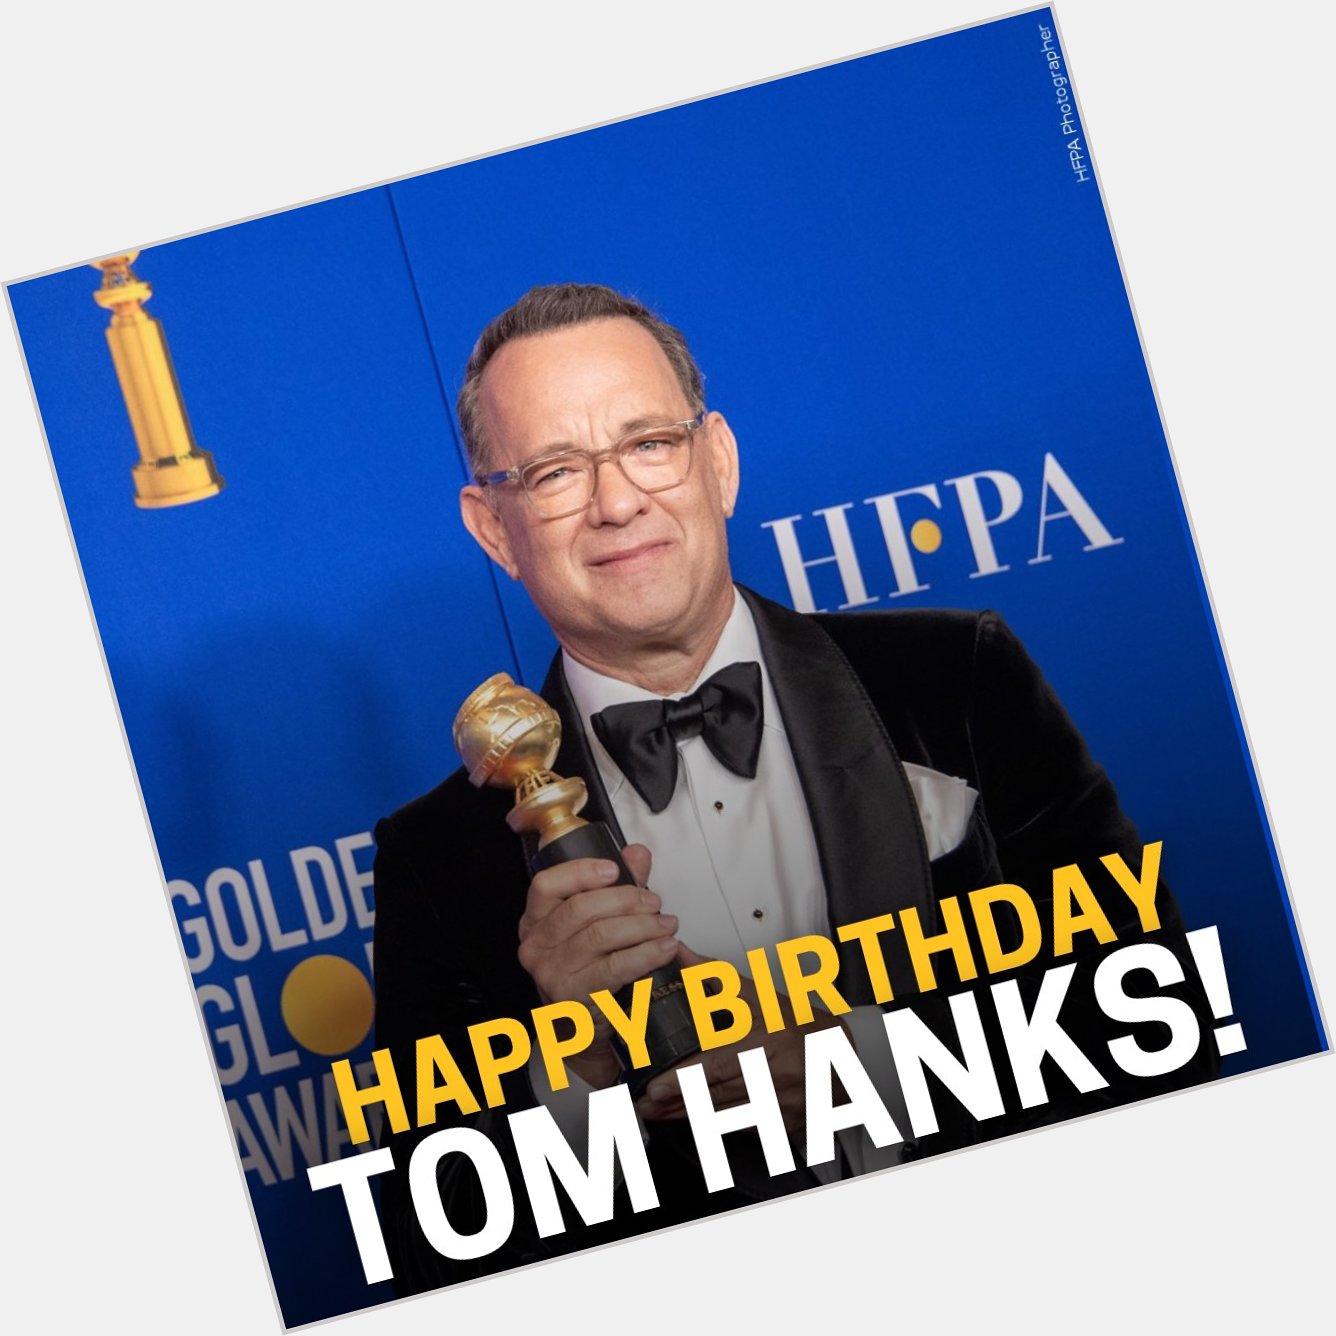 Happy birthday Tom Hanks! What is your favorite Tom Hanks movie? 